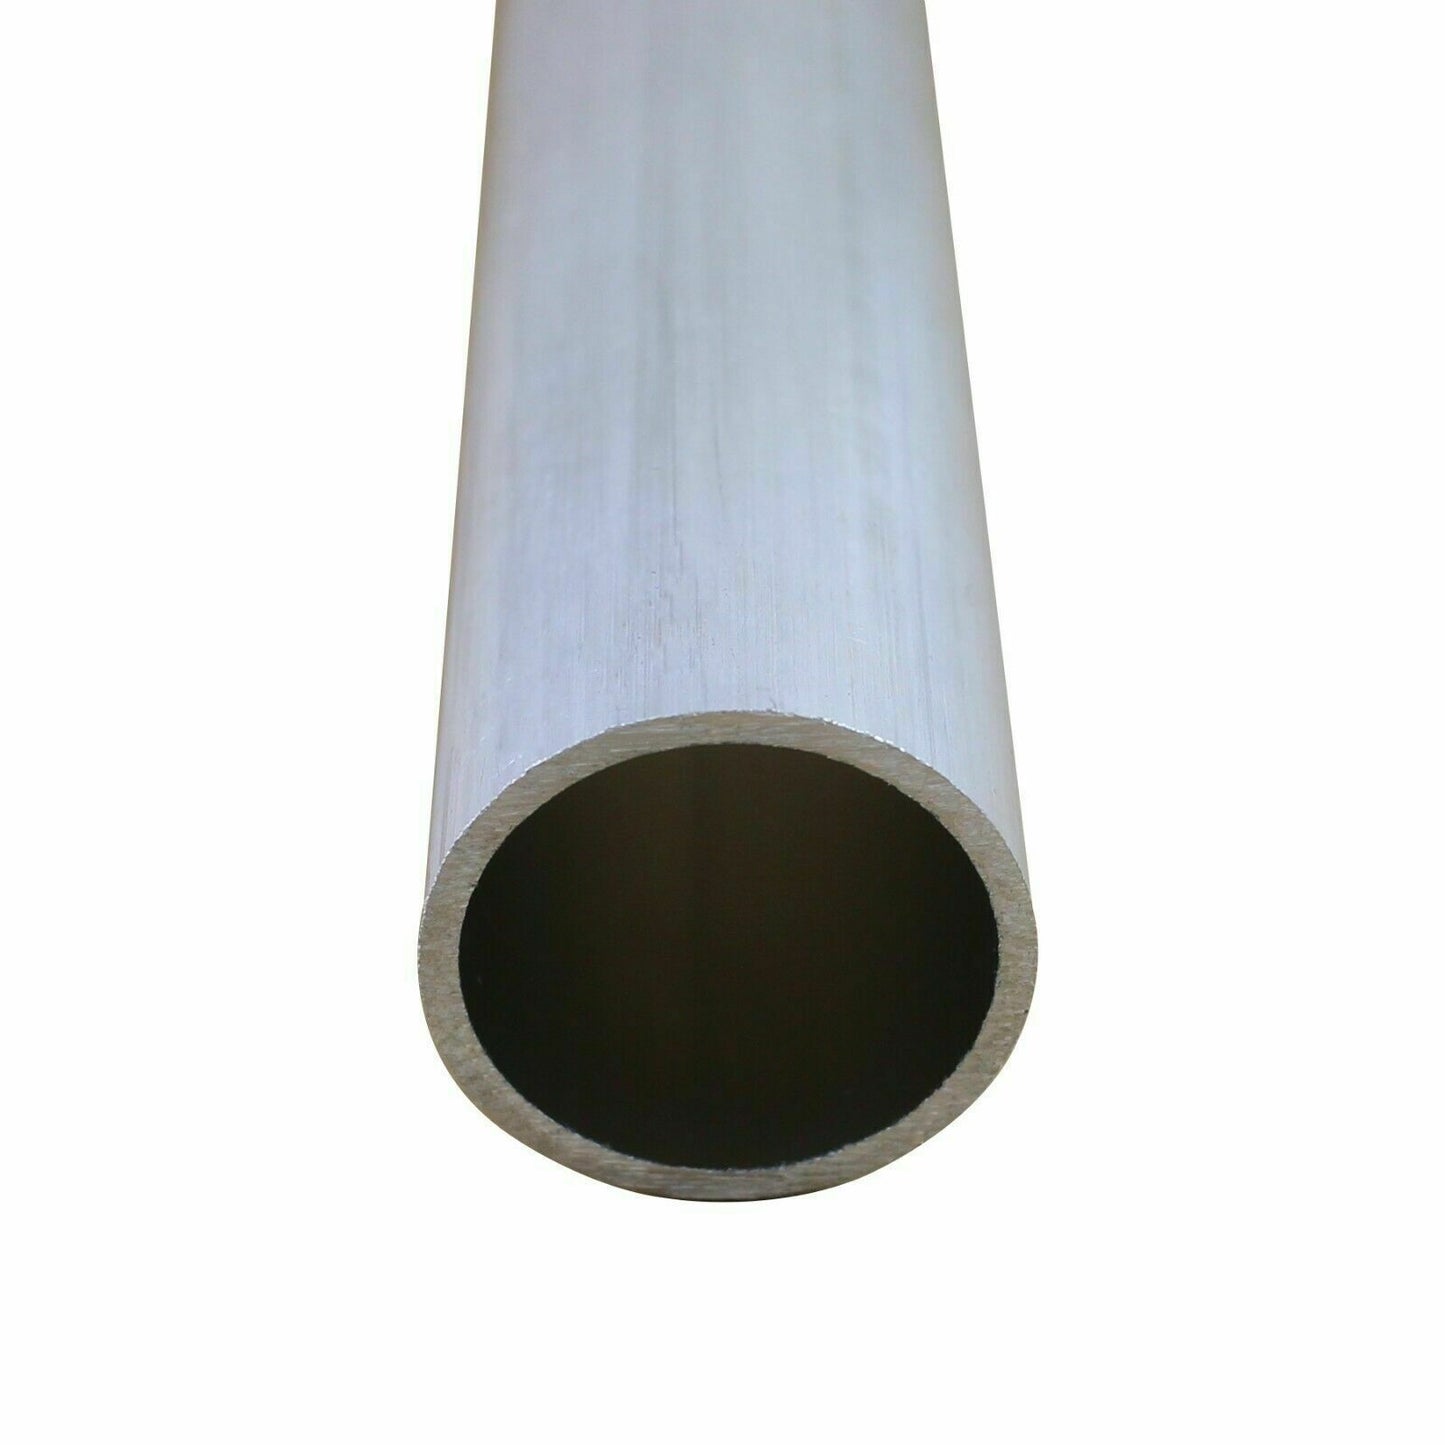 OD 14 mm ID 8 mm 1 Pcs Aluminum Round Tube Pipe